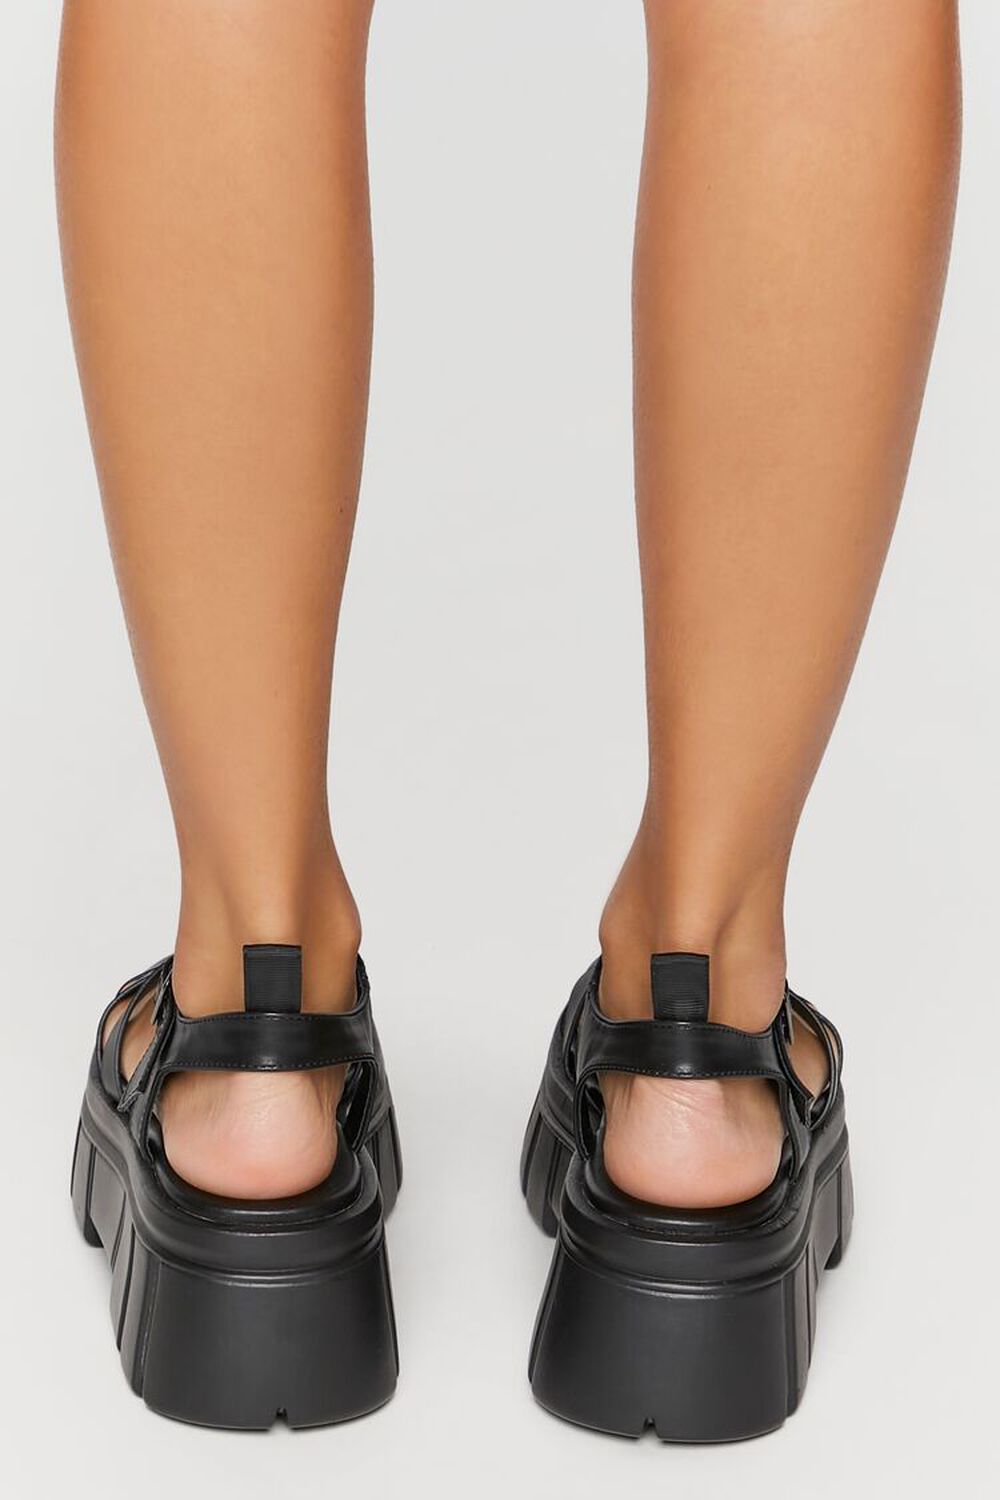 BLACK Faux Leather Caged Lug-Sole Sandals, image 3